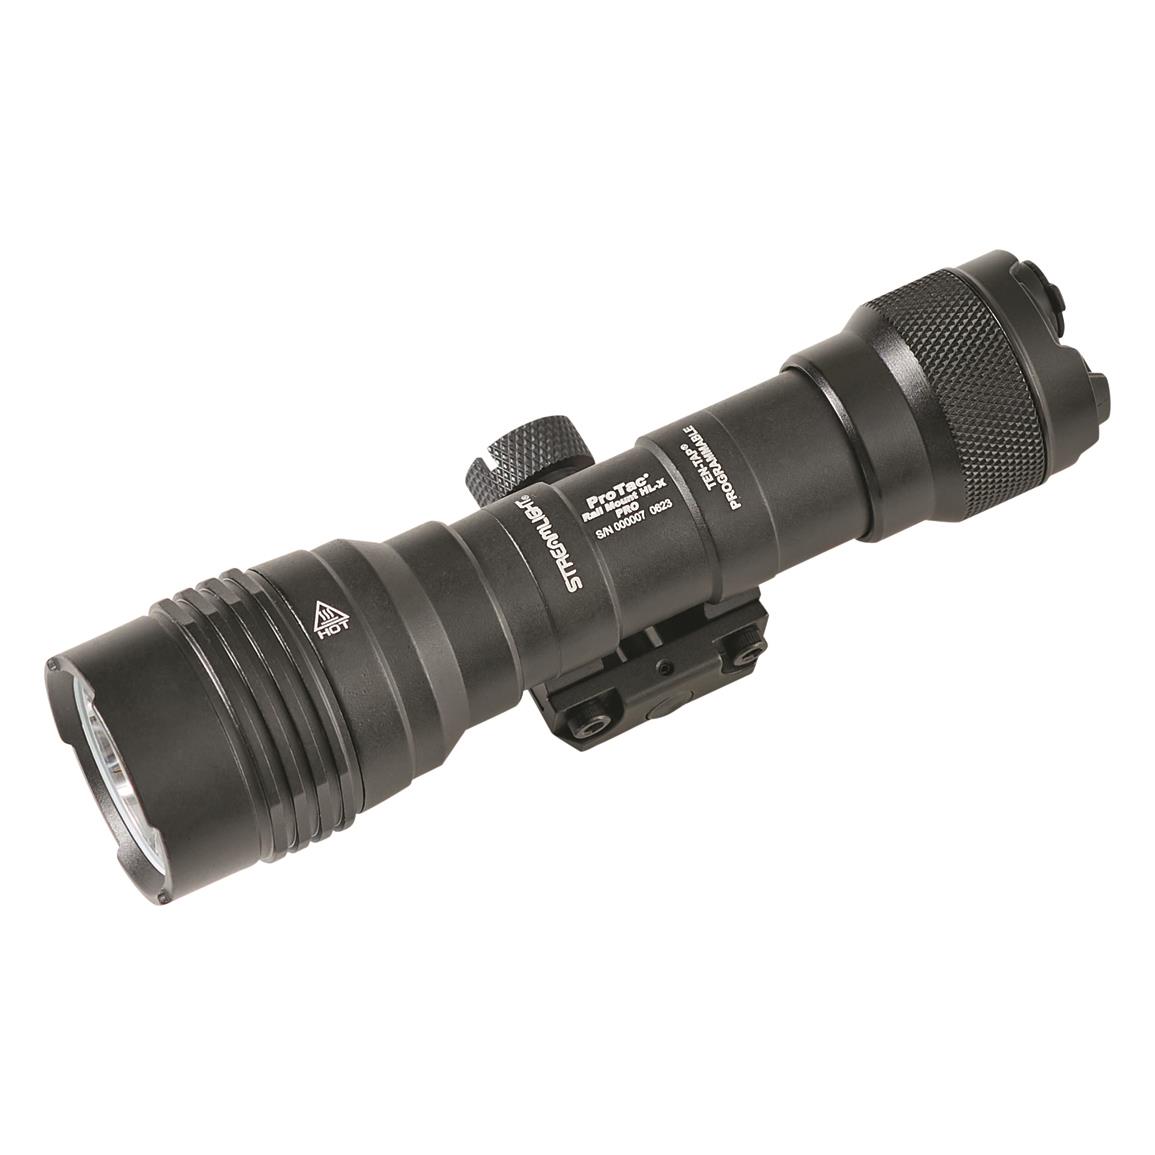 Streamlight ProTac HL-X Pro 1,000-lumen Weapon Light